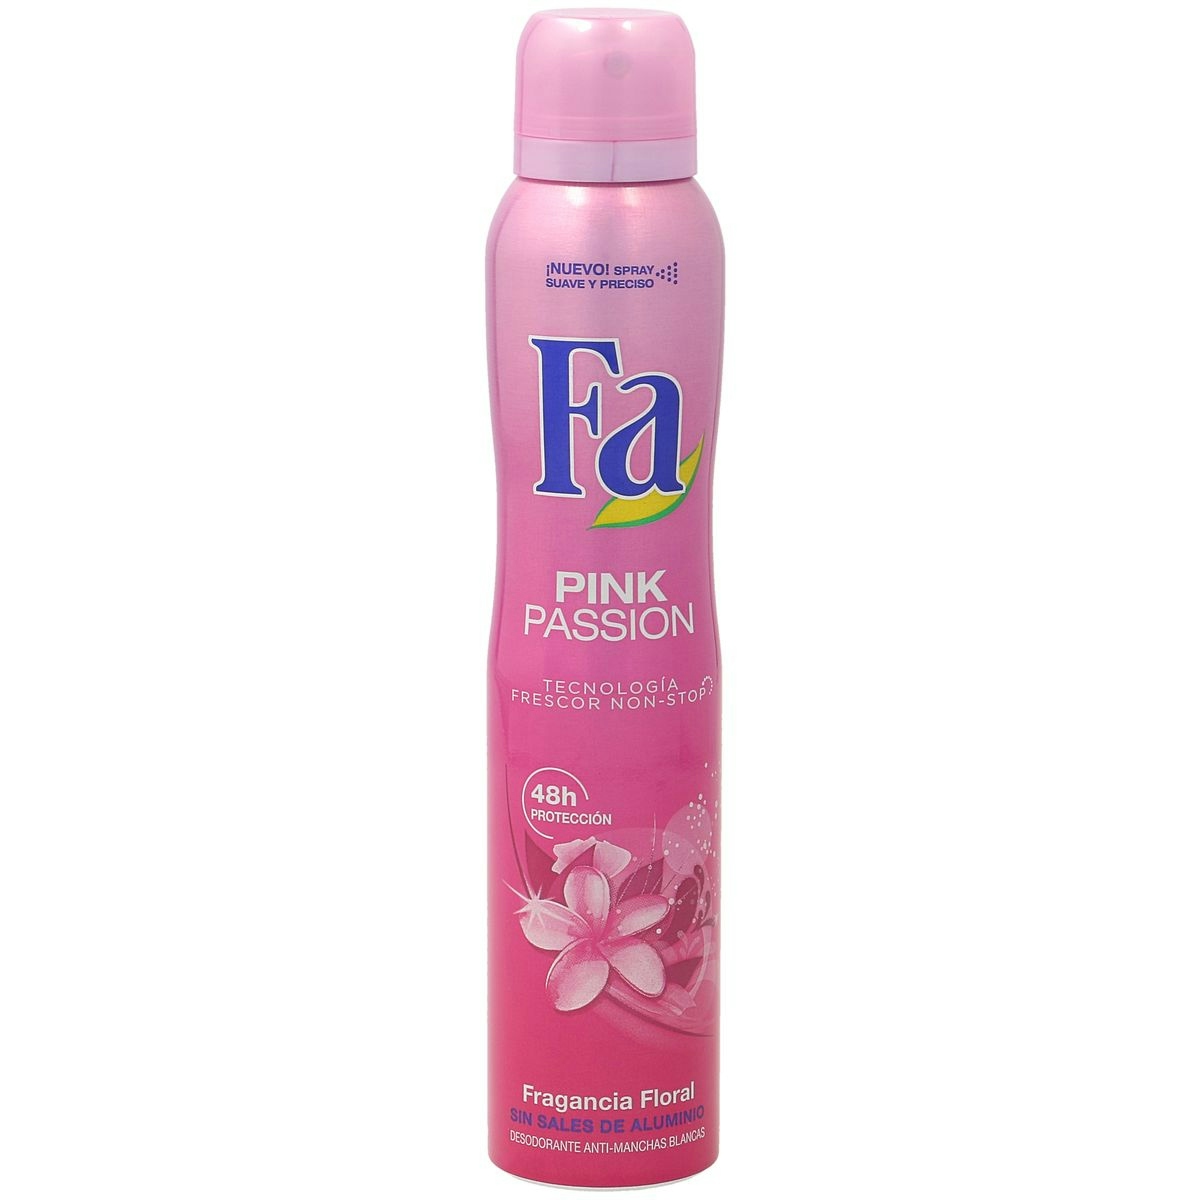 Desodorante Spray Pink Passion 200ml